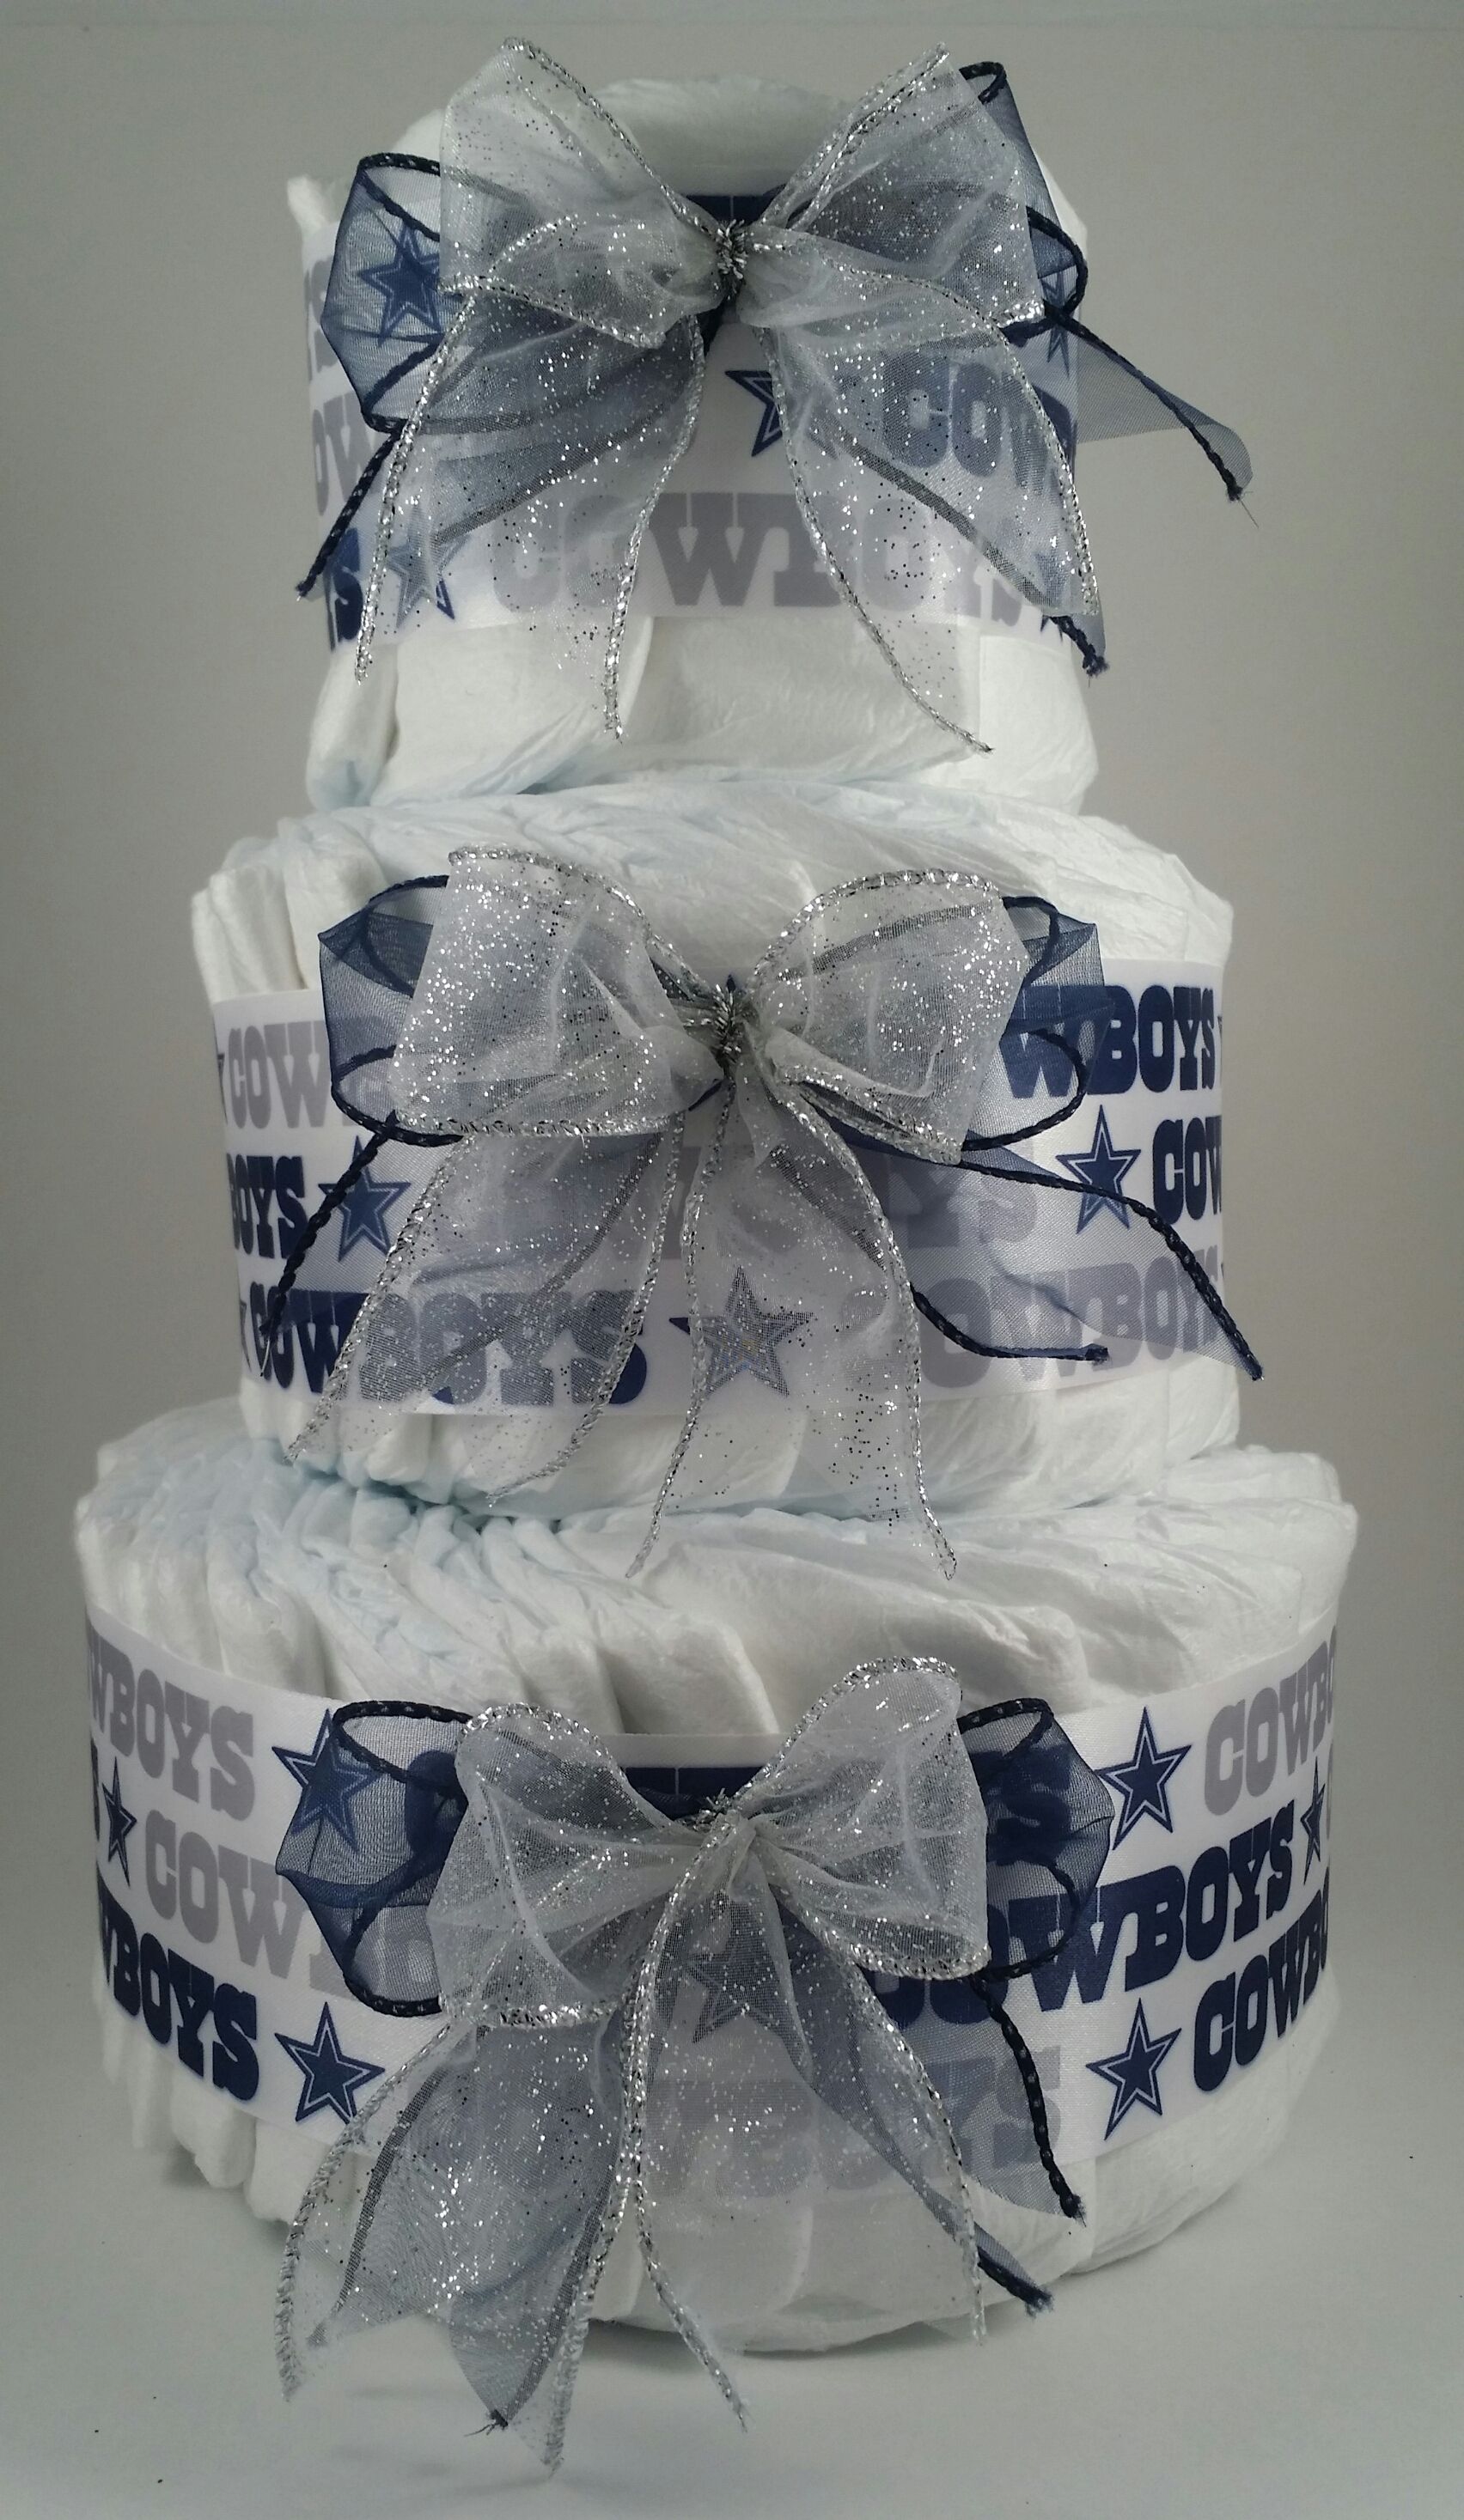 Dallas Cowboys themed diaper cake